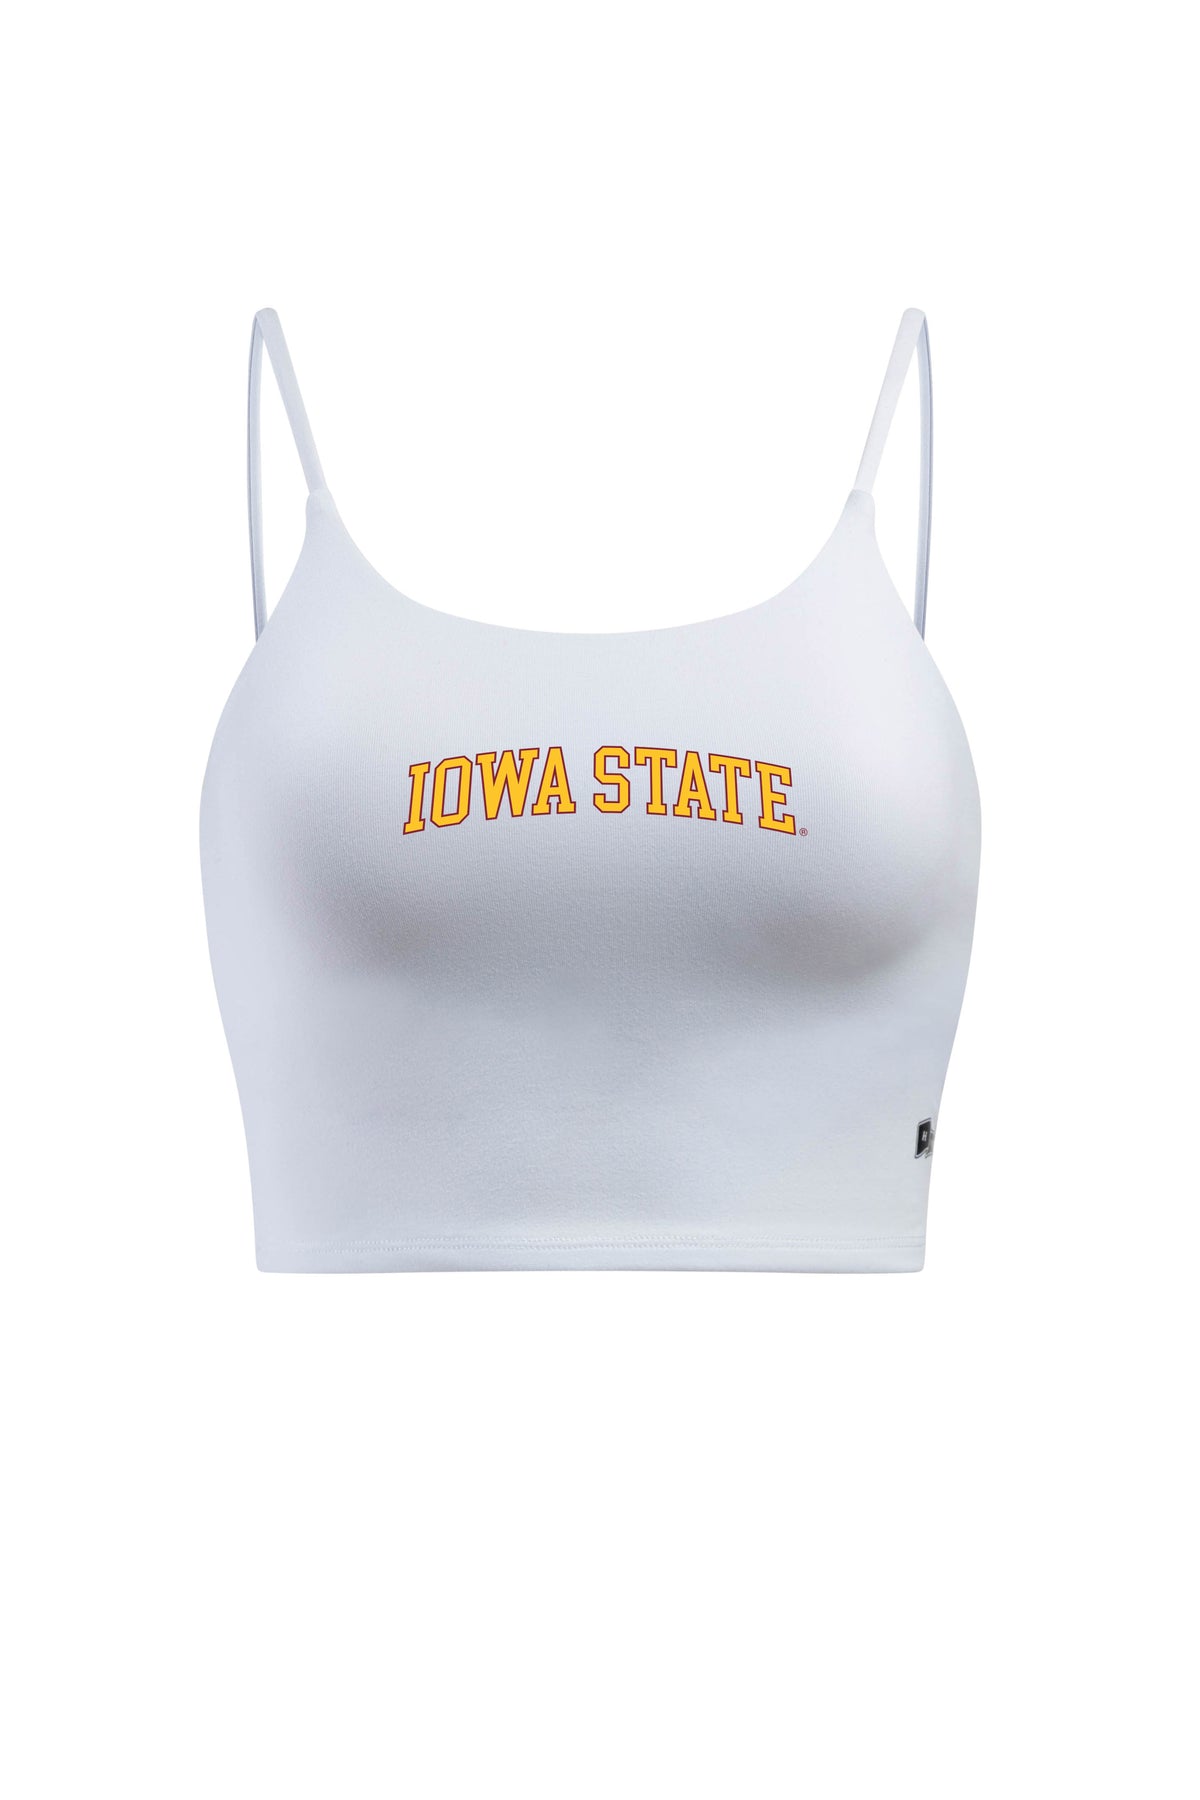 Iowa State University Bra Tank Top